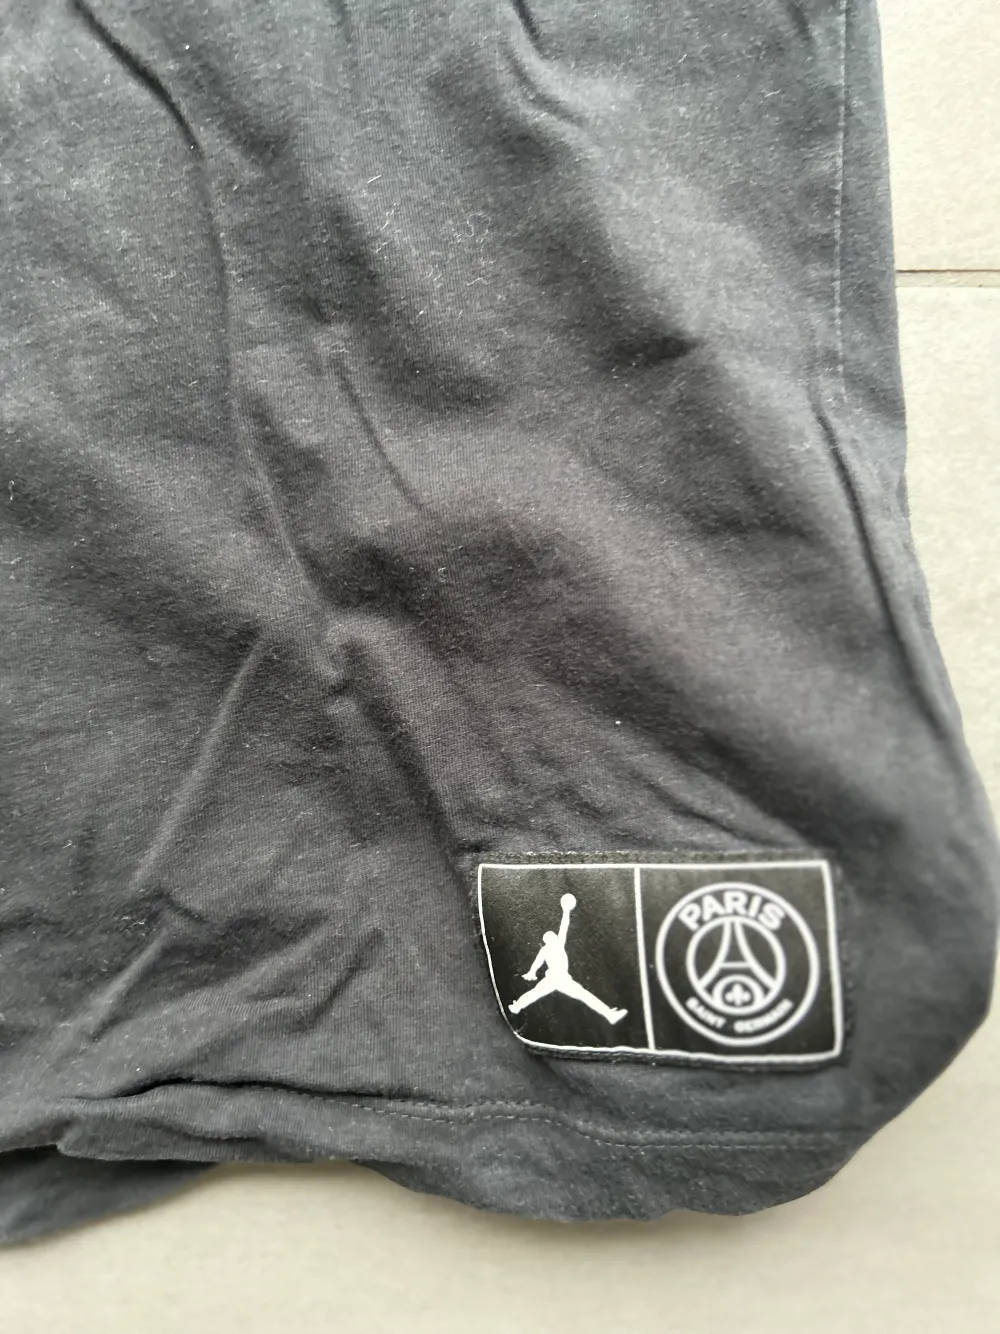 Köpt på Nike i Paris för 500kr Skick 8/10 Storlek XS men passar XS/S . T-shirts.